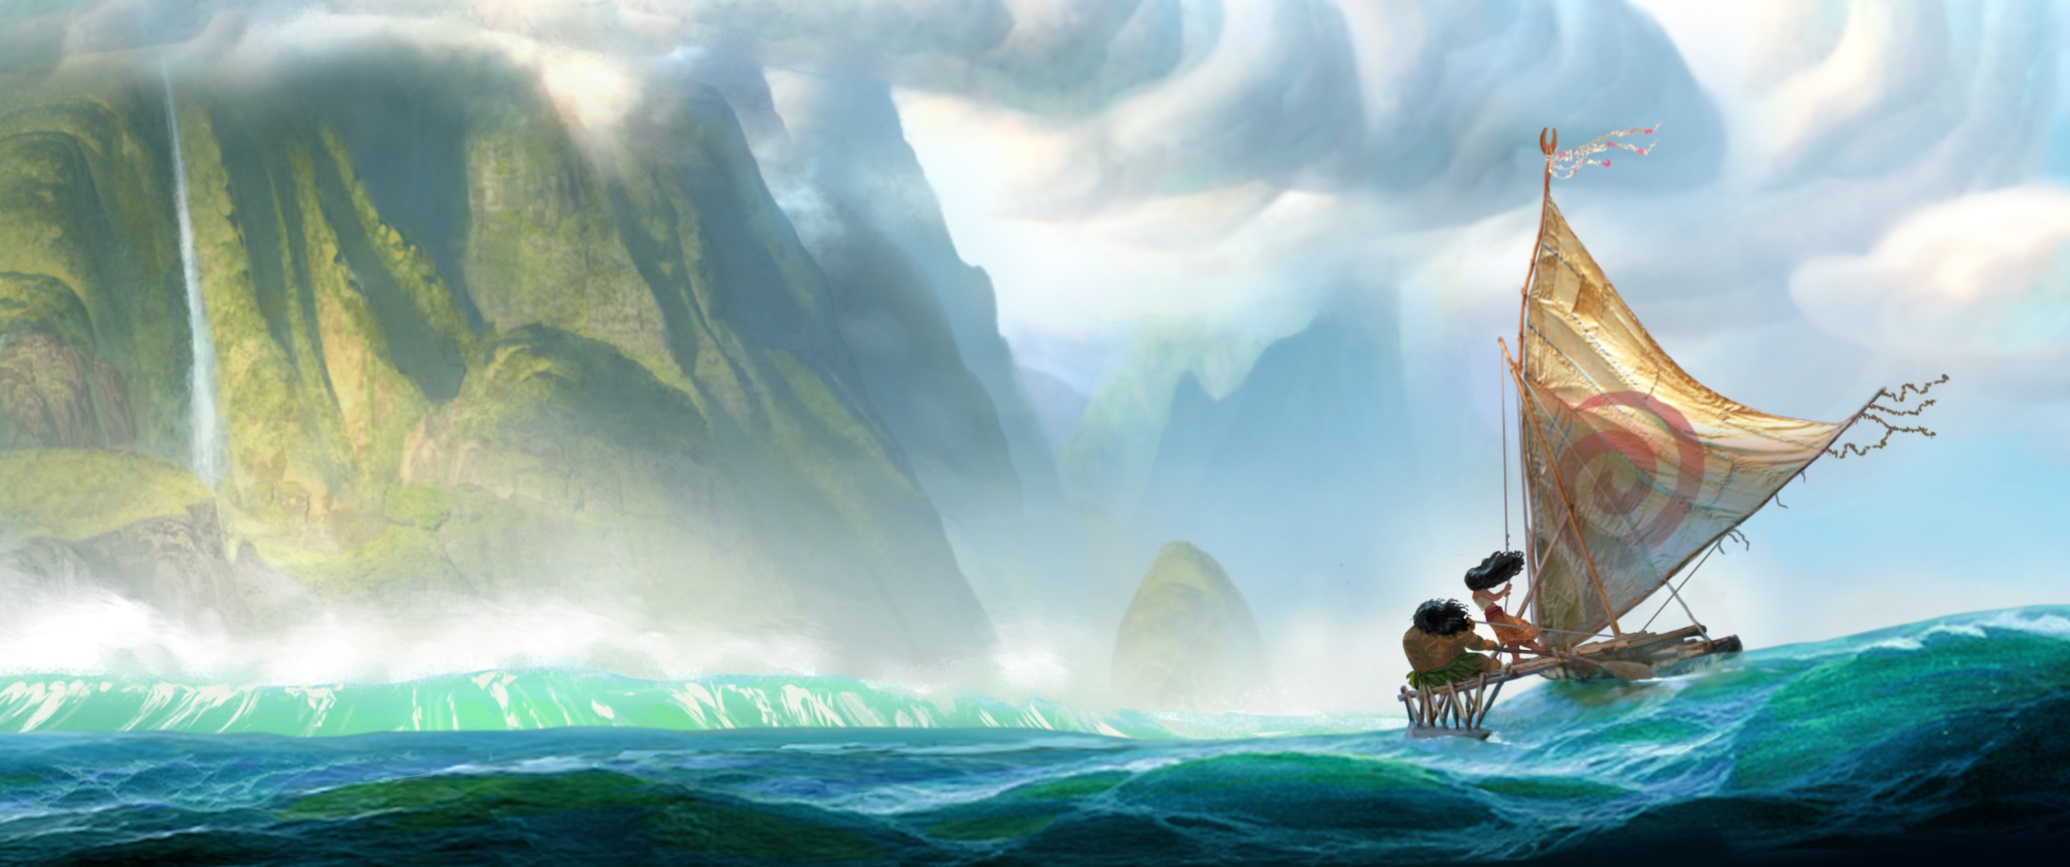 Walt Disney Animation Studios Sets Sail with “Moana”